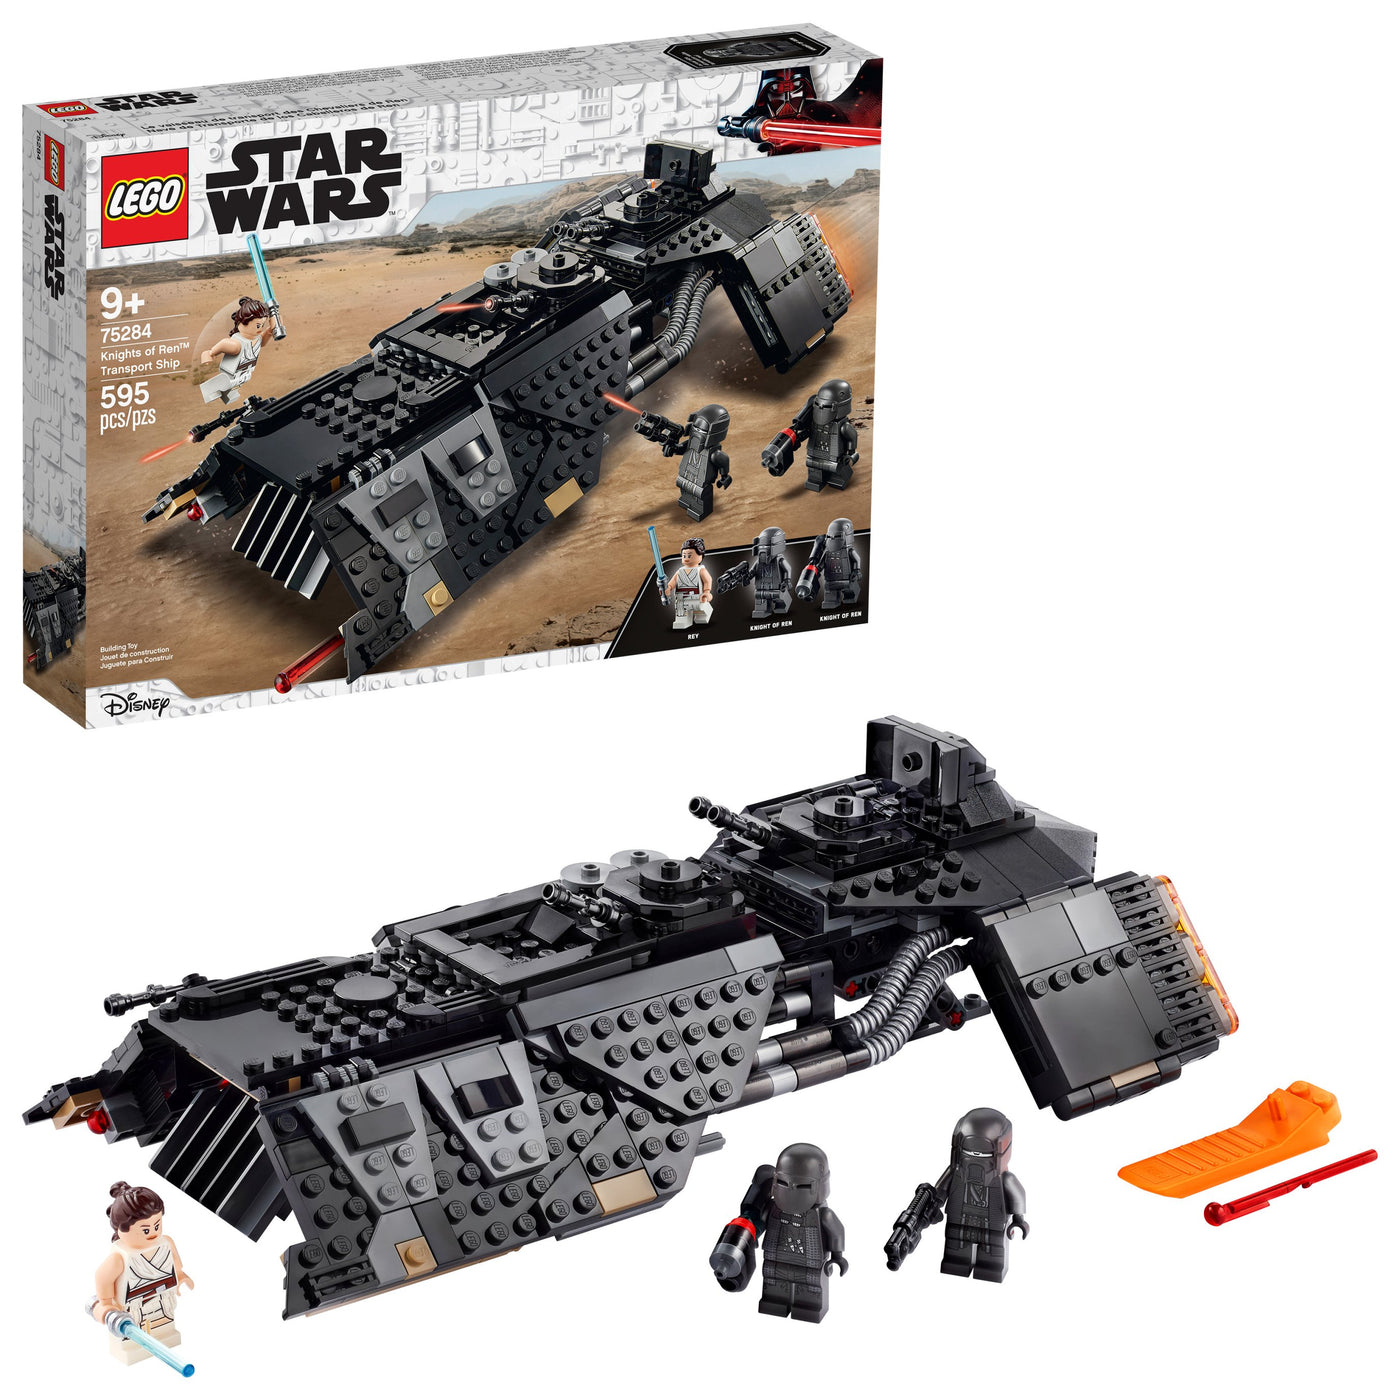 LEGO Star Wars: The Rise of Skywalker Knights of Ren Transport Ship (75284)